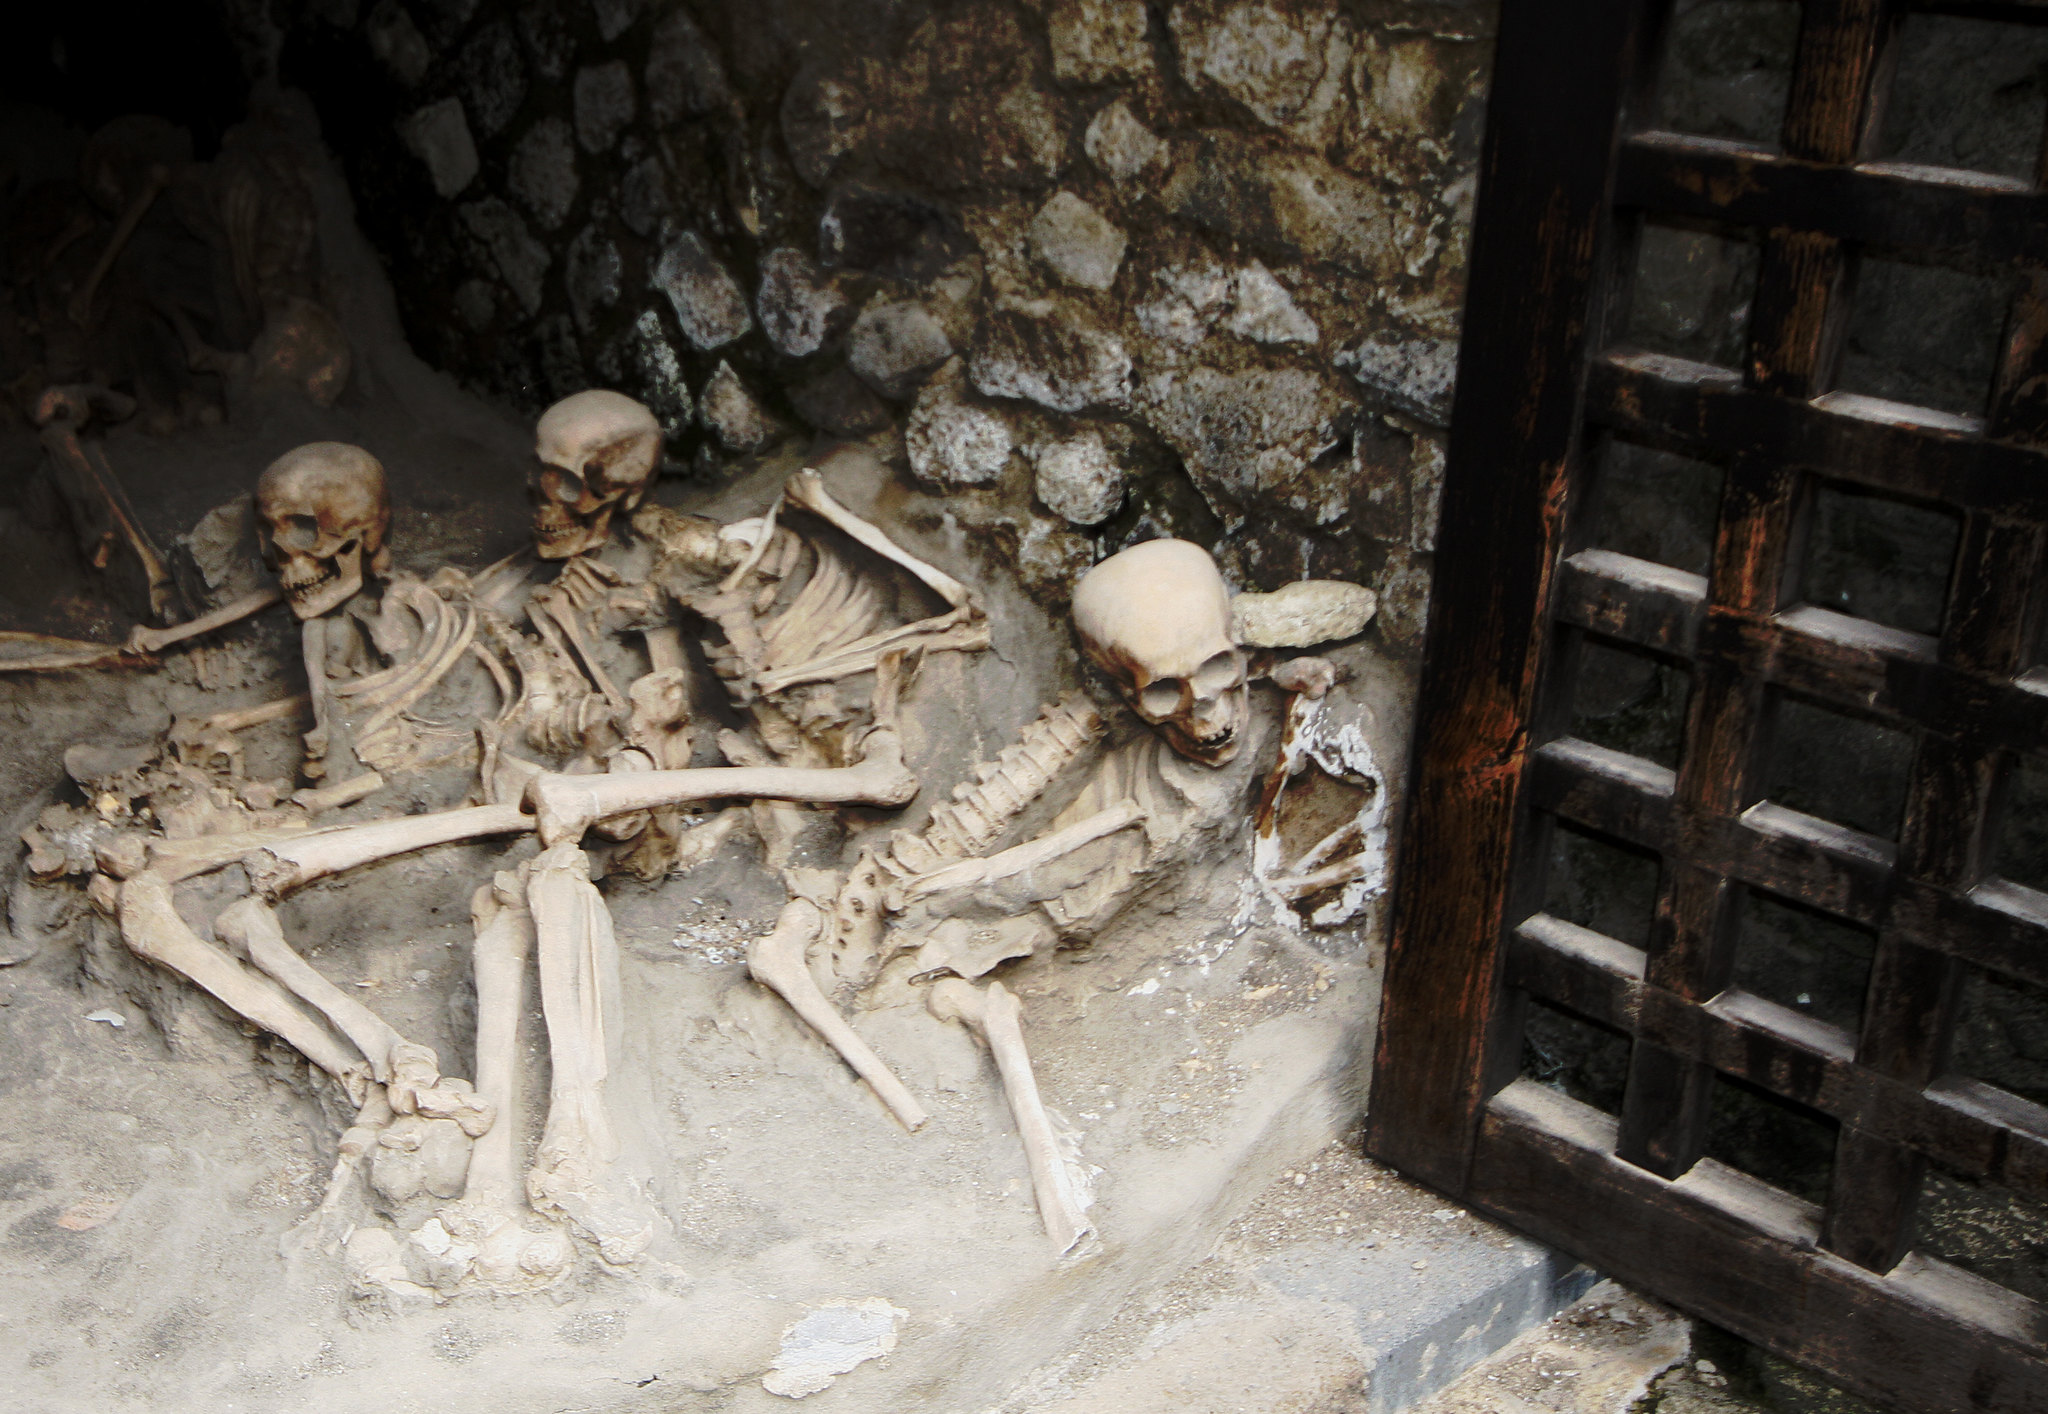 skeletons in the boat houses of herculaneum